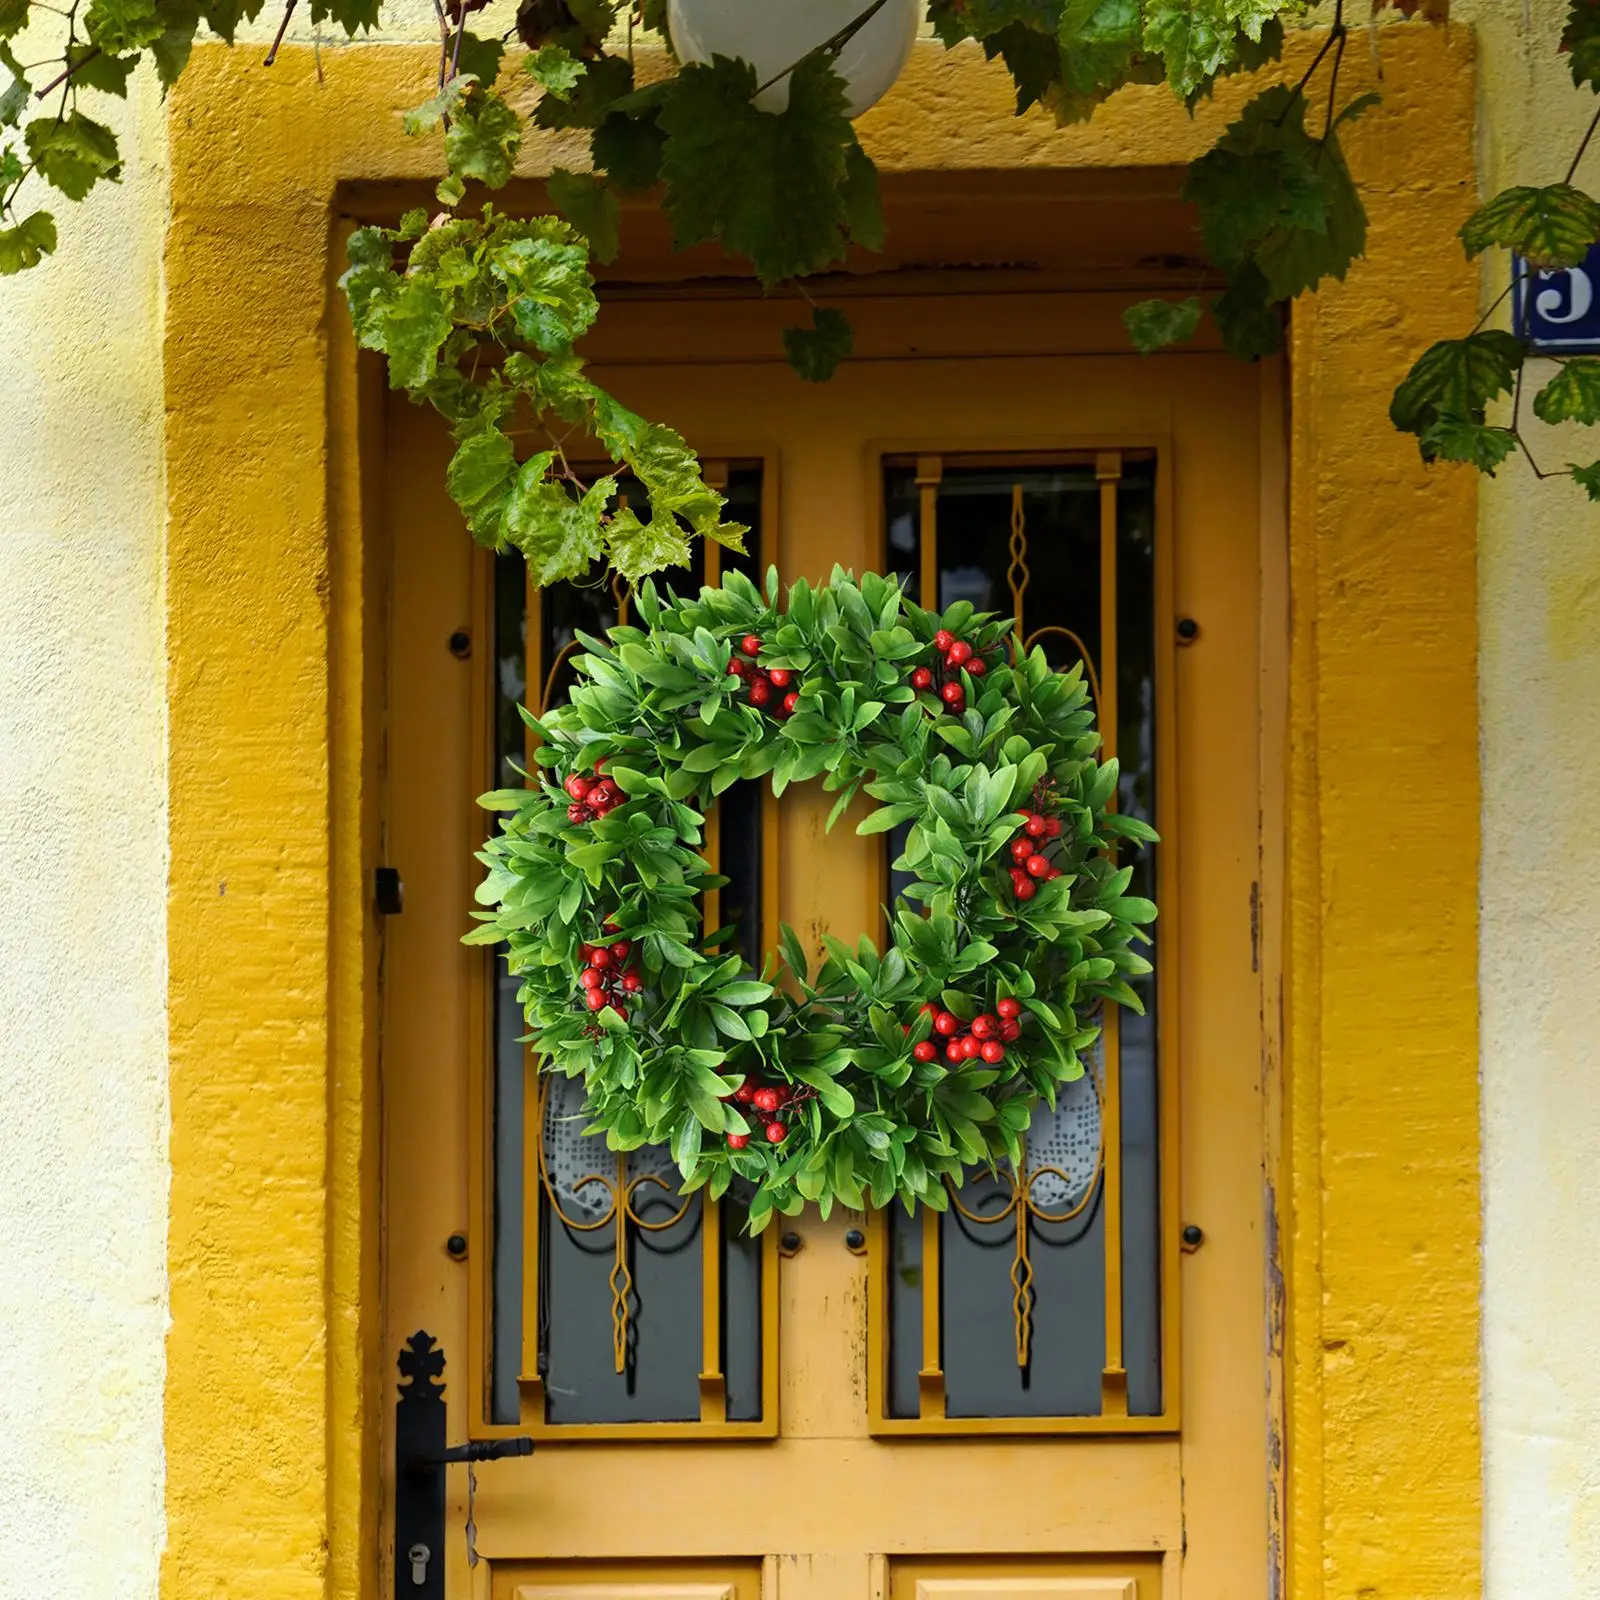 Christmas Wreath 45cm Diameter Green Leaves Red Berries Decorations Front Door Wreath for Fireplace Office Hotel Window Wedding